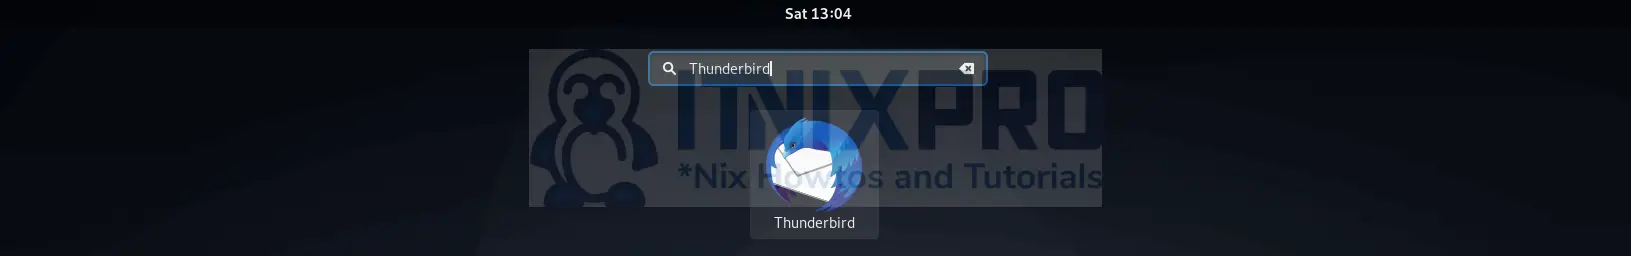 Install Thunderbird mail client on Debian 11